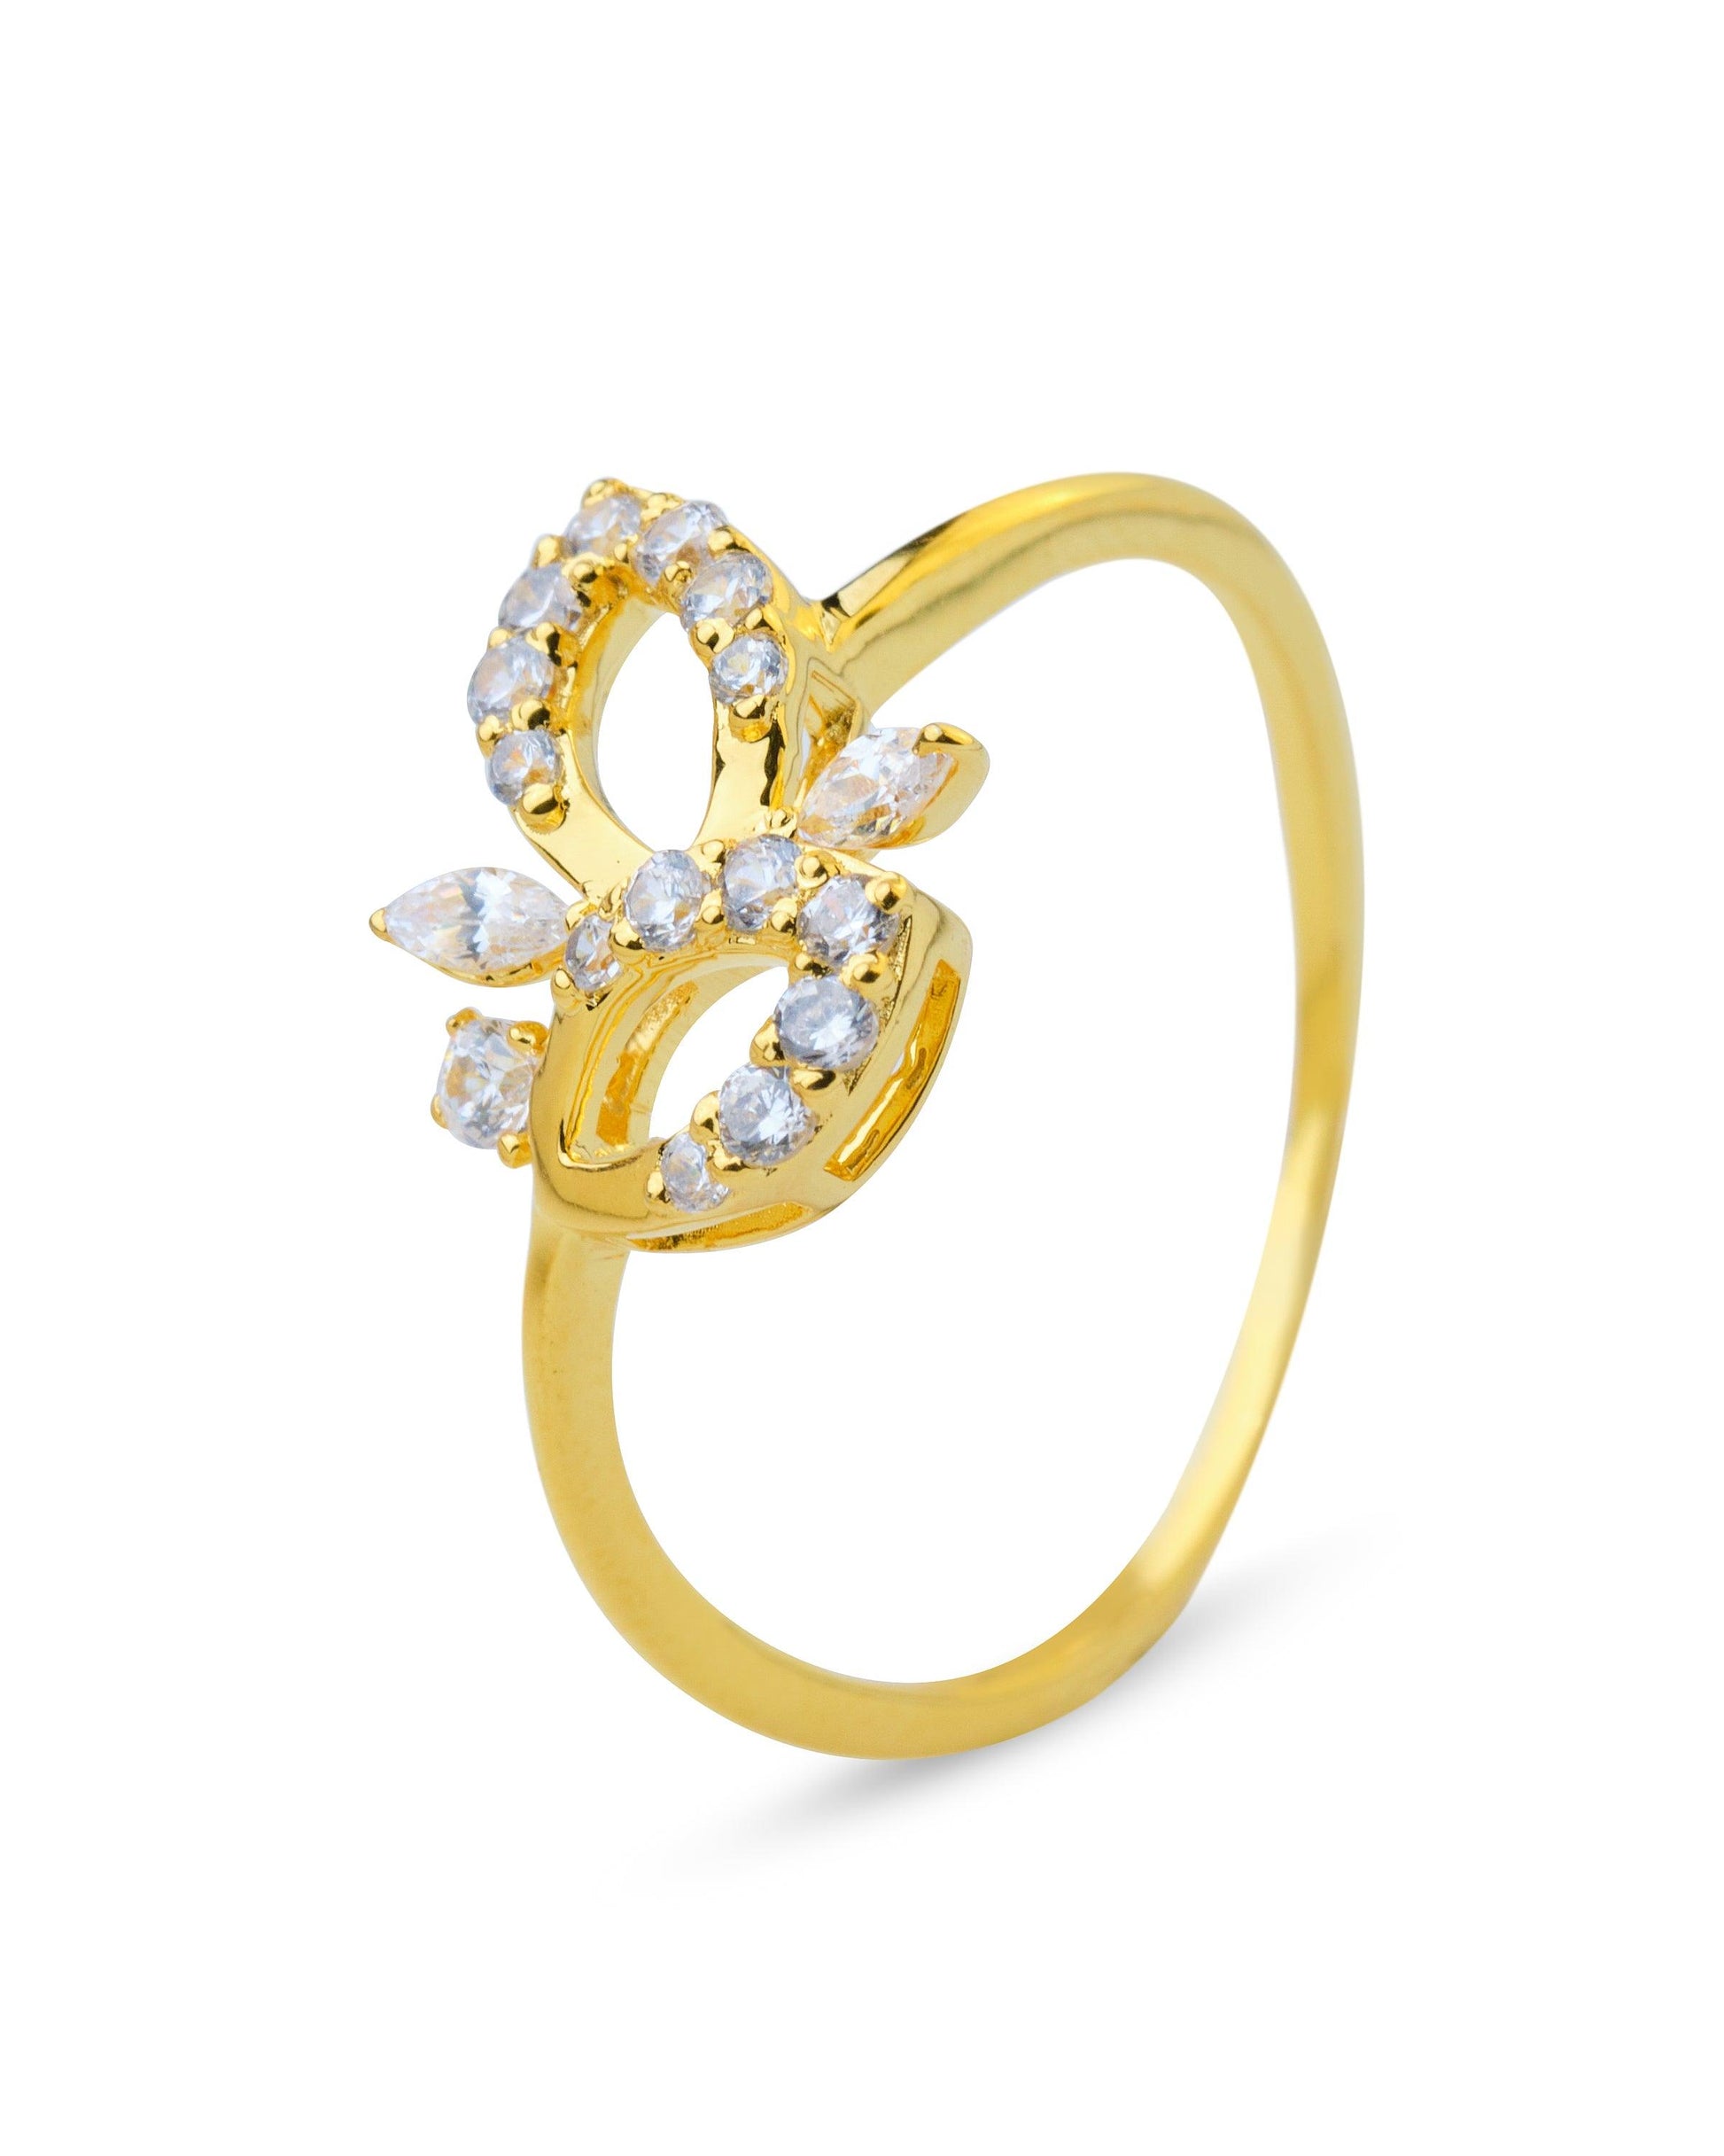 Trickel Gold & Diamond Ring - Chandrani Pearls